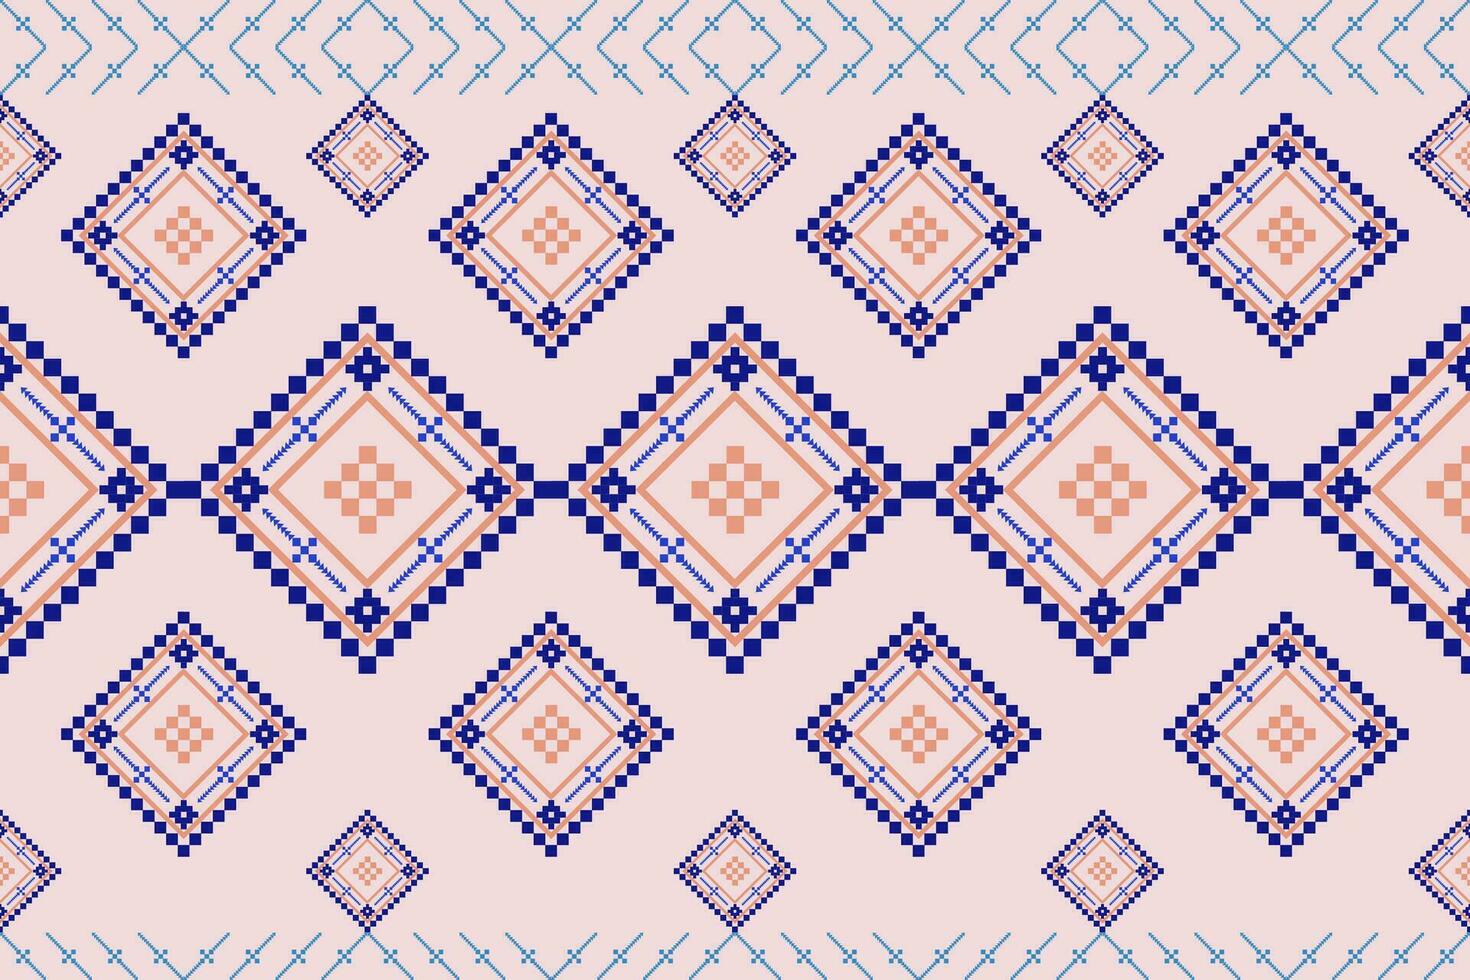 Aztec fabric carpet mandala ornament native boho chevron textile decoration wallpaper.Geometric vector illustrations background.Colorful ethnic pattern design for batik,fabric,carpet,clothing,wrapping